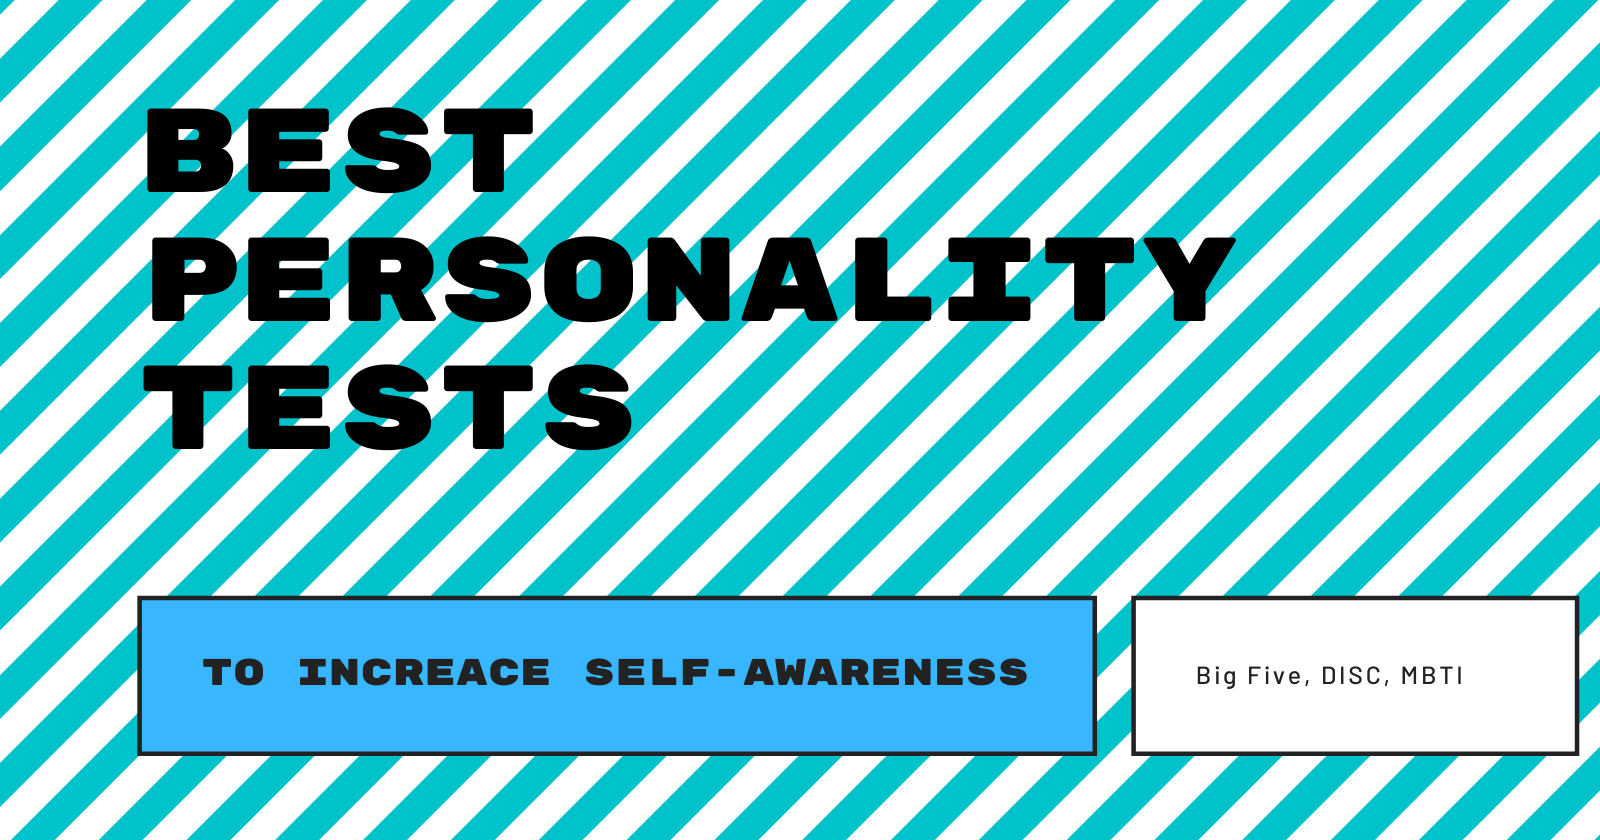 Best personality tests: Big Five, DISC, MBTI